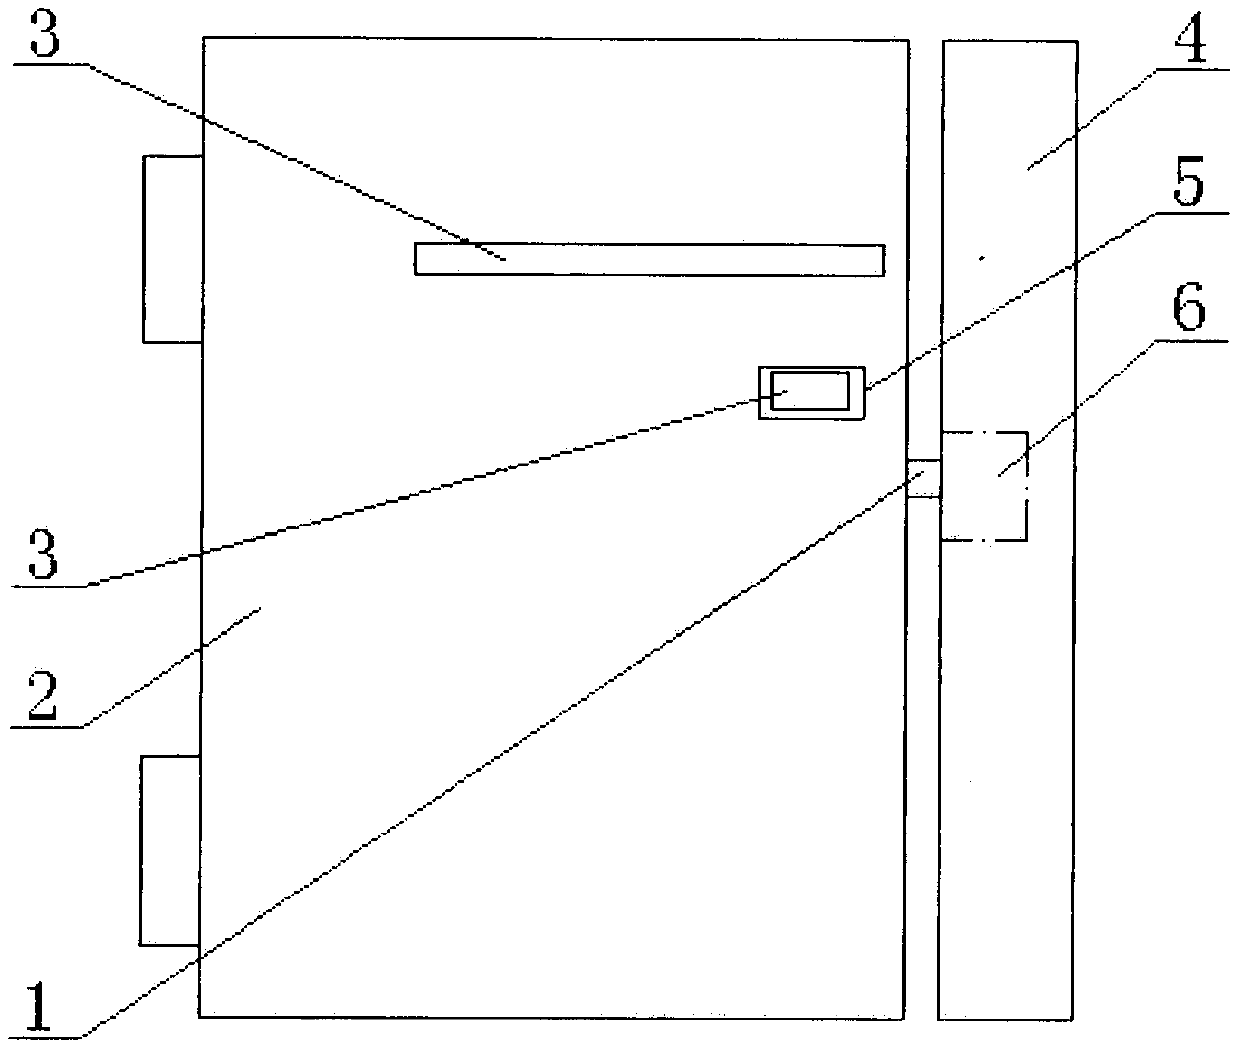 Electric control door lock system and accidental door closing prevention method